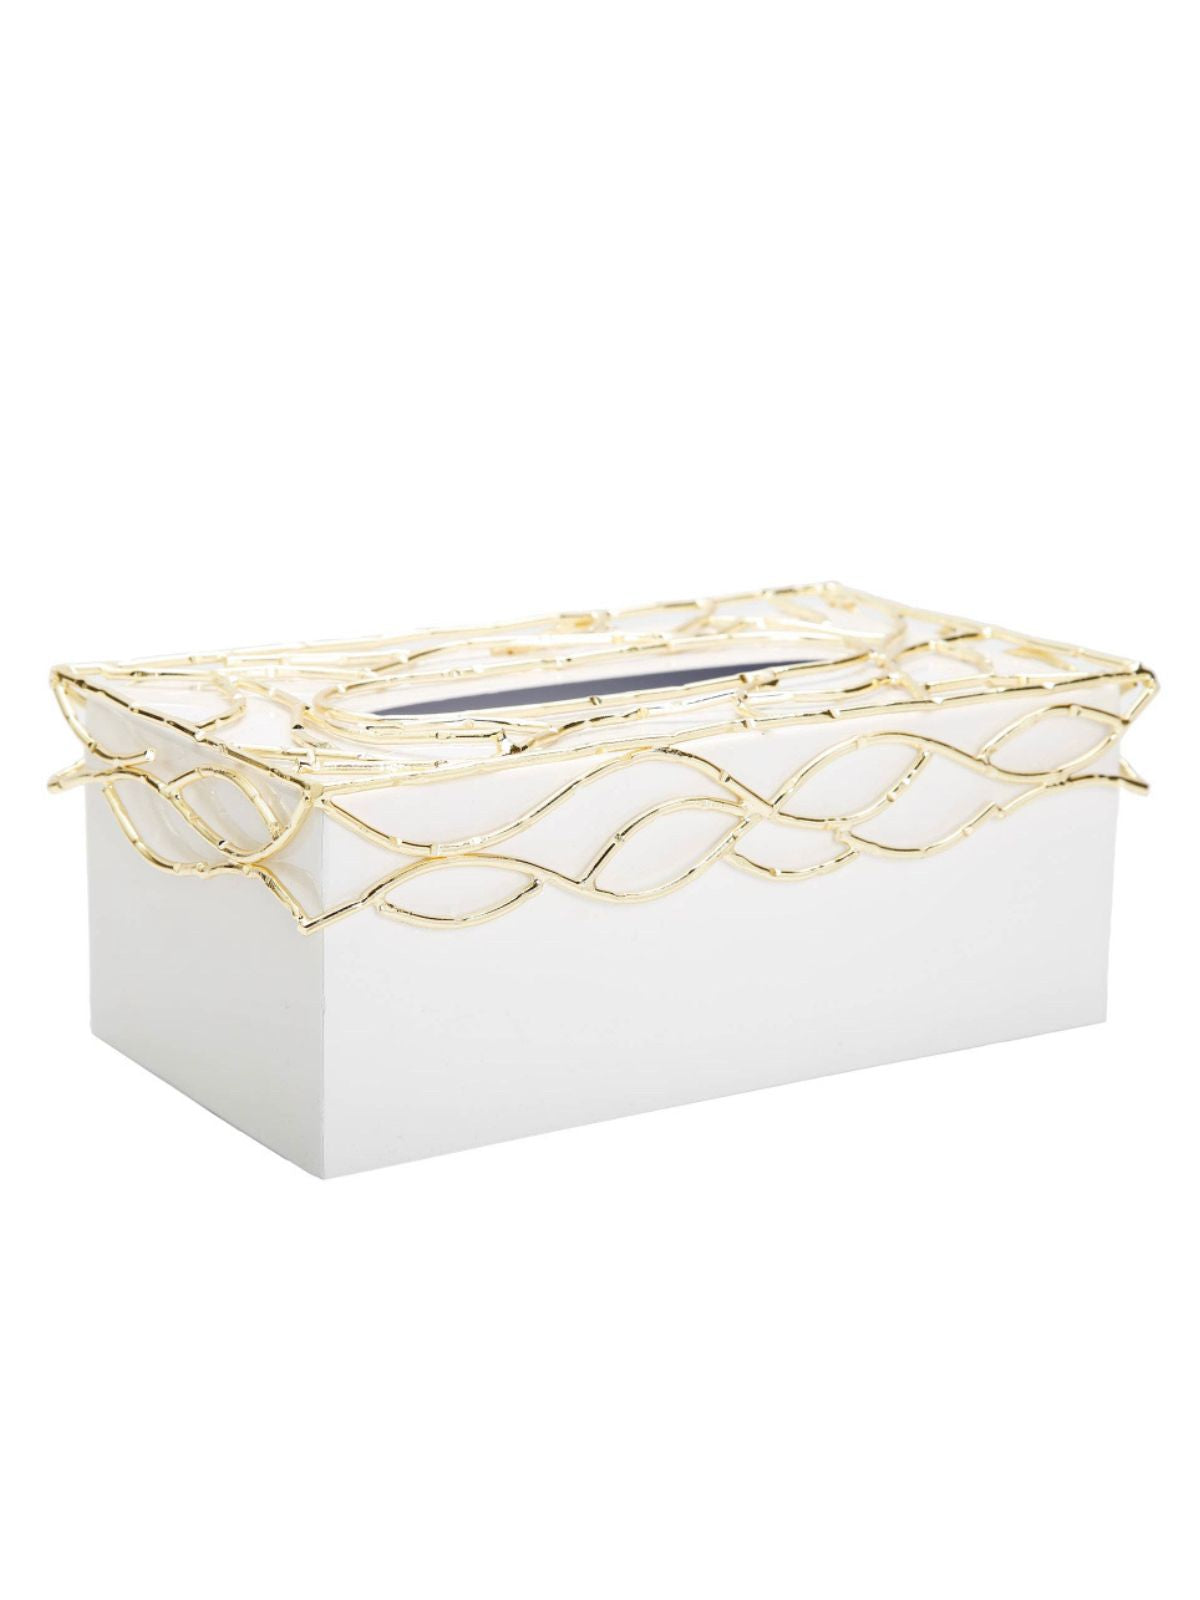 White Ceramic tissue box holder with gold mesh design on top, 10L x 5W. 